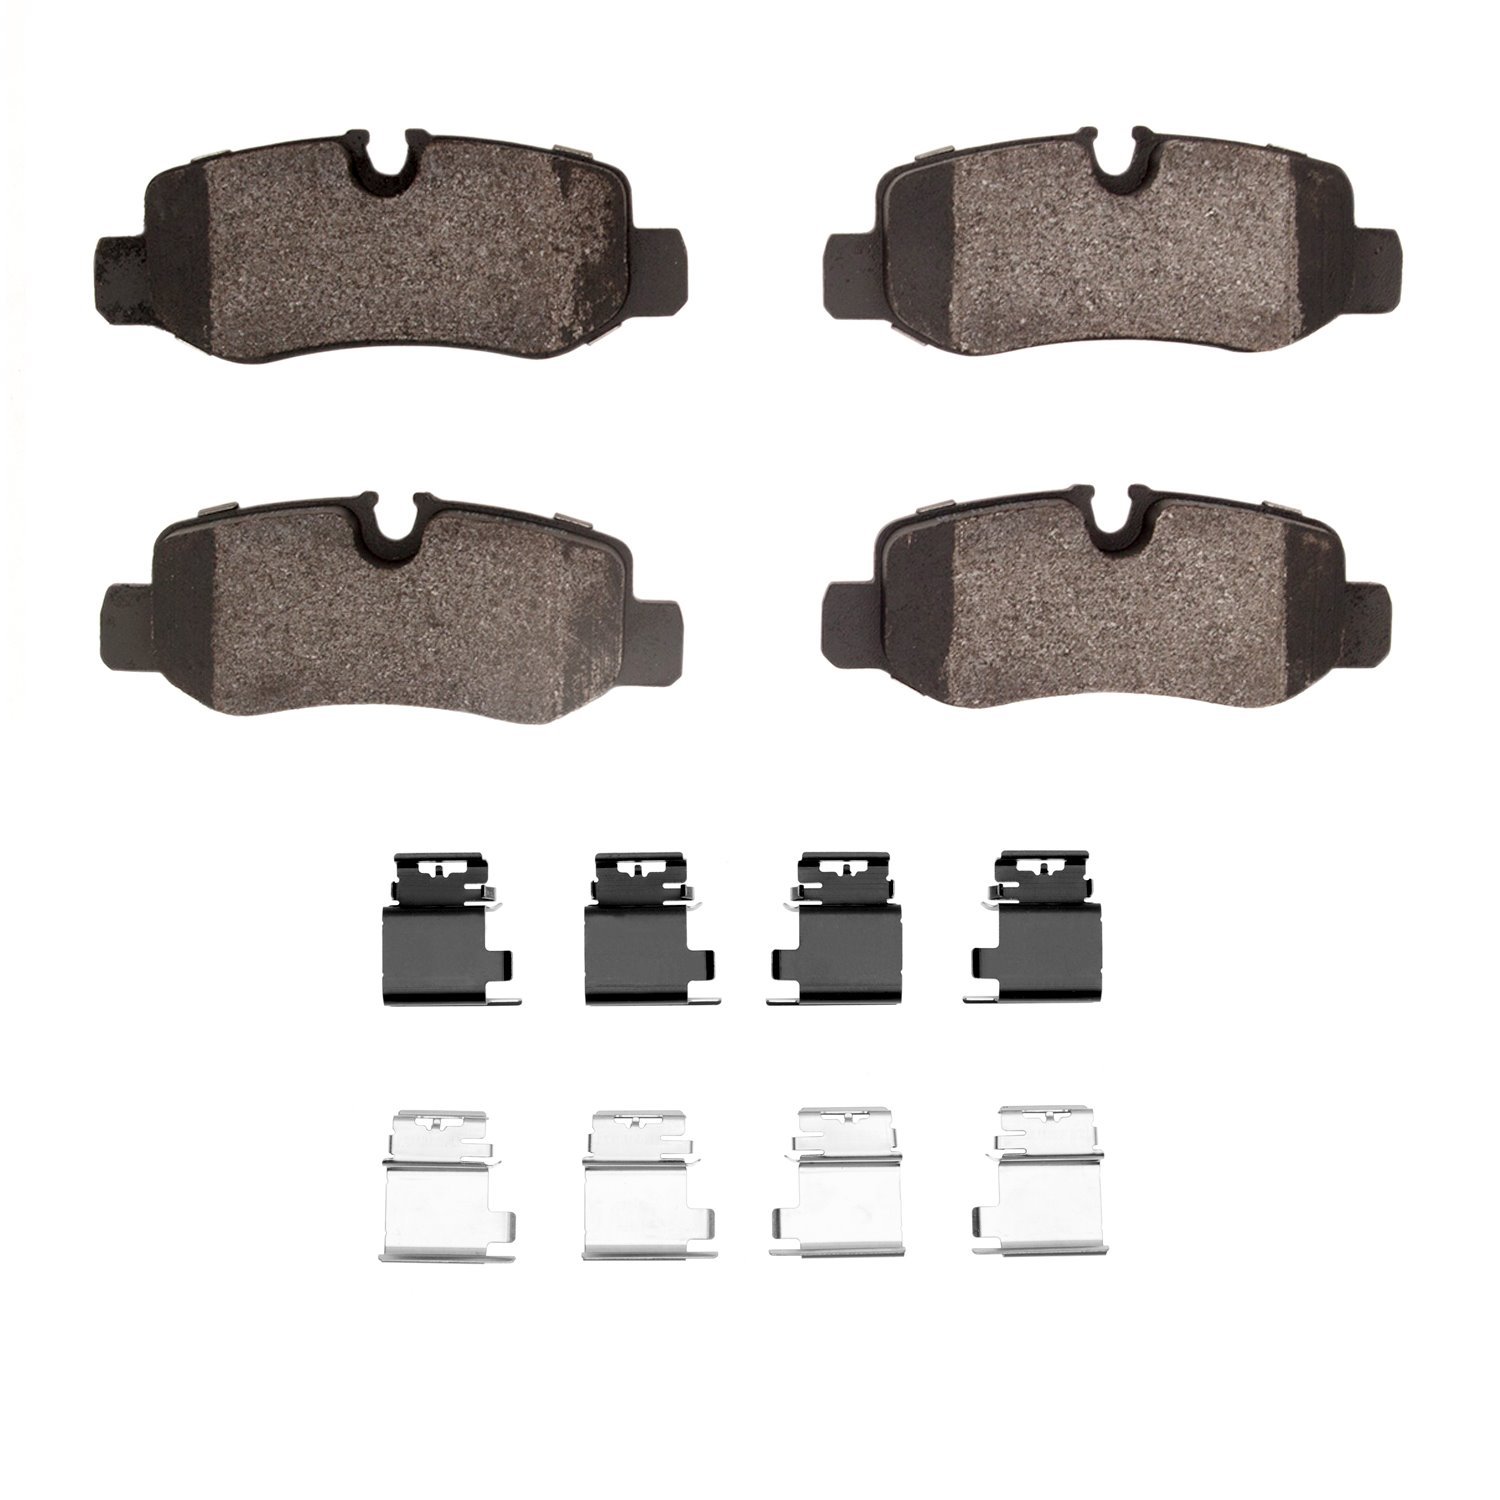 1600-1893-01 5000 Euro Ceramic Brake Pads & Hardware Kit, Fits Select Mercedes-Benz, Position: Rear